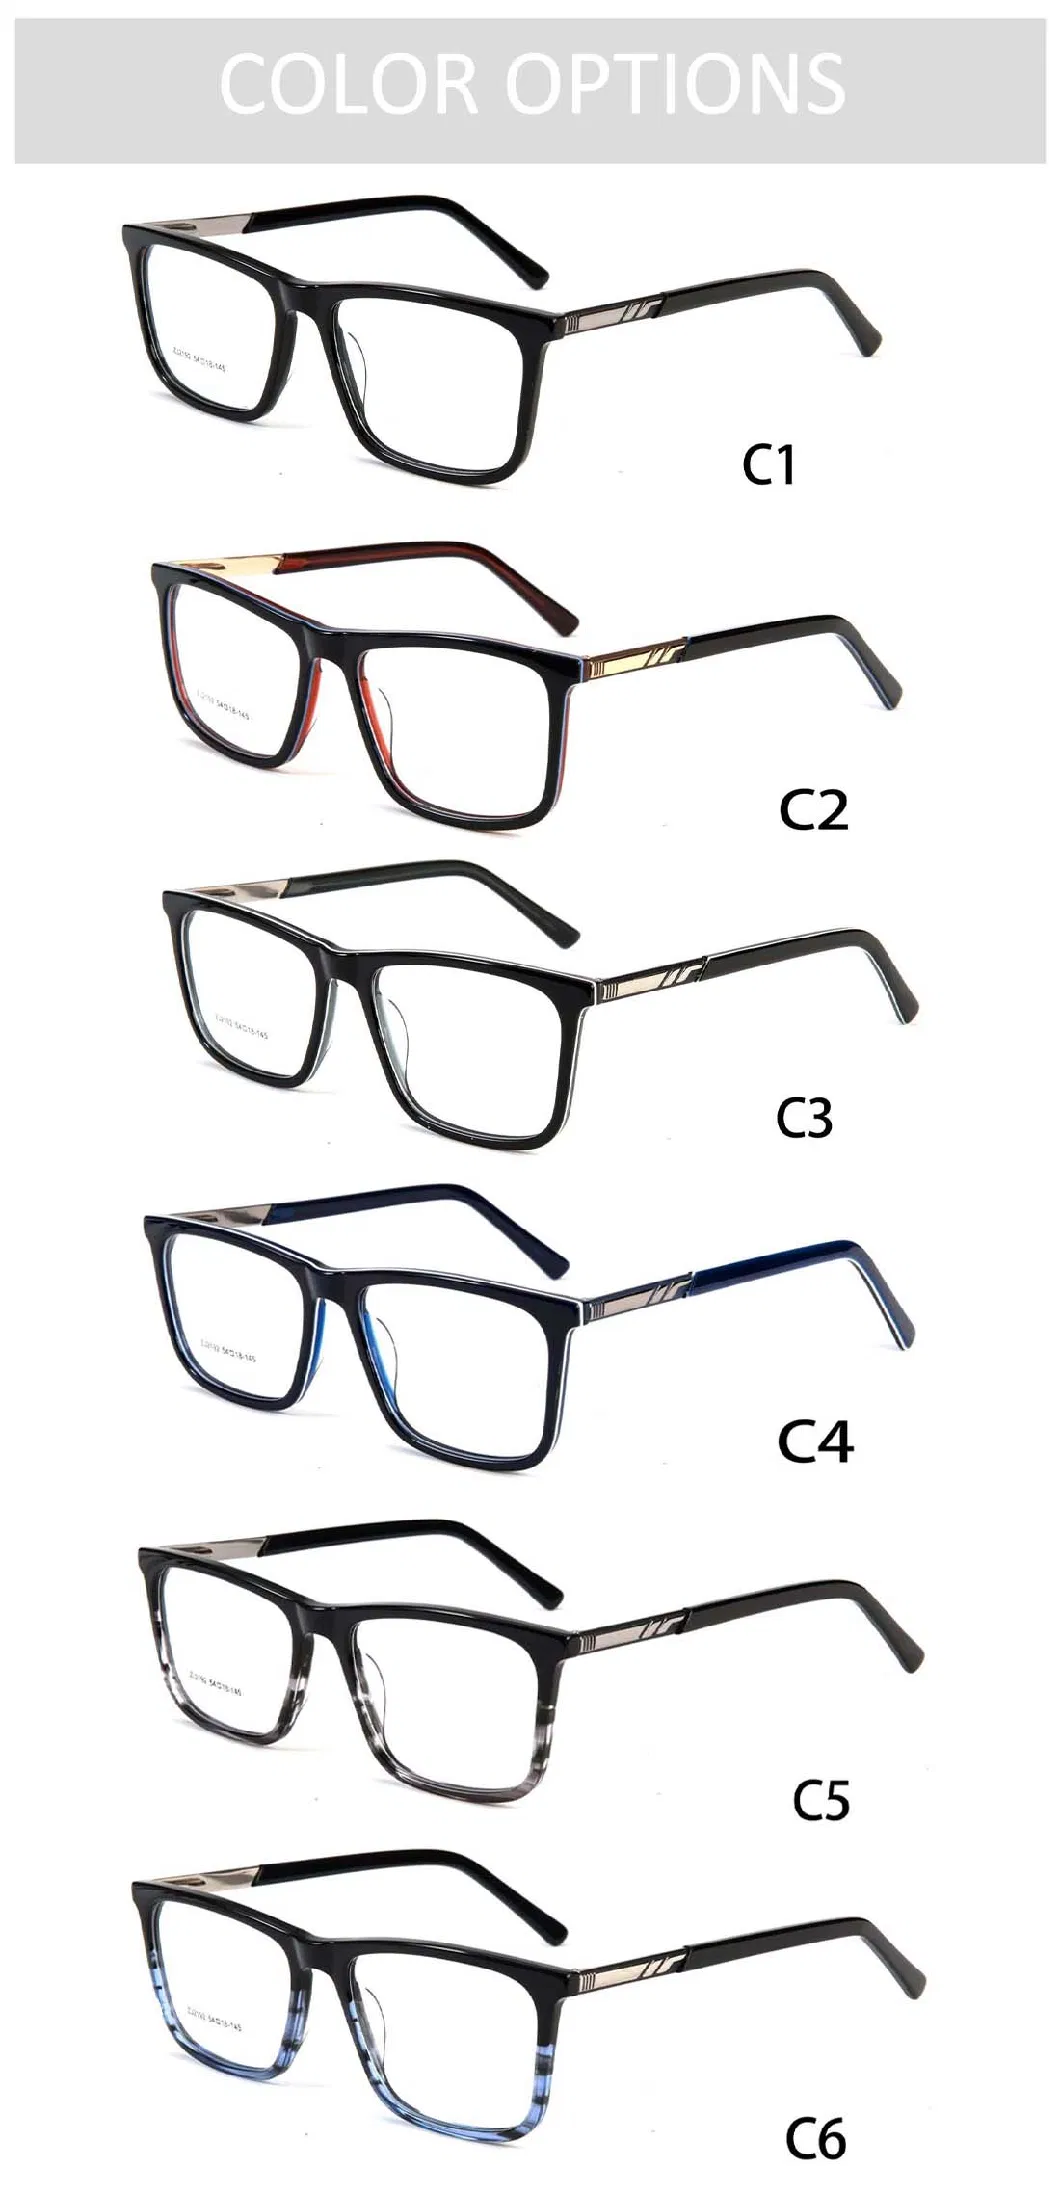 Gd New Model Acetate Eyeglasses Frames Optical in Blue Stripe with Spring Hinge Stainless Optical Frames